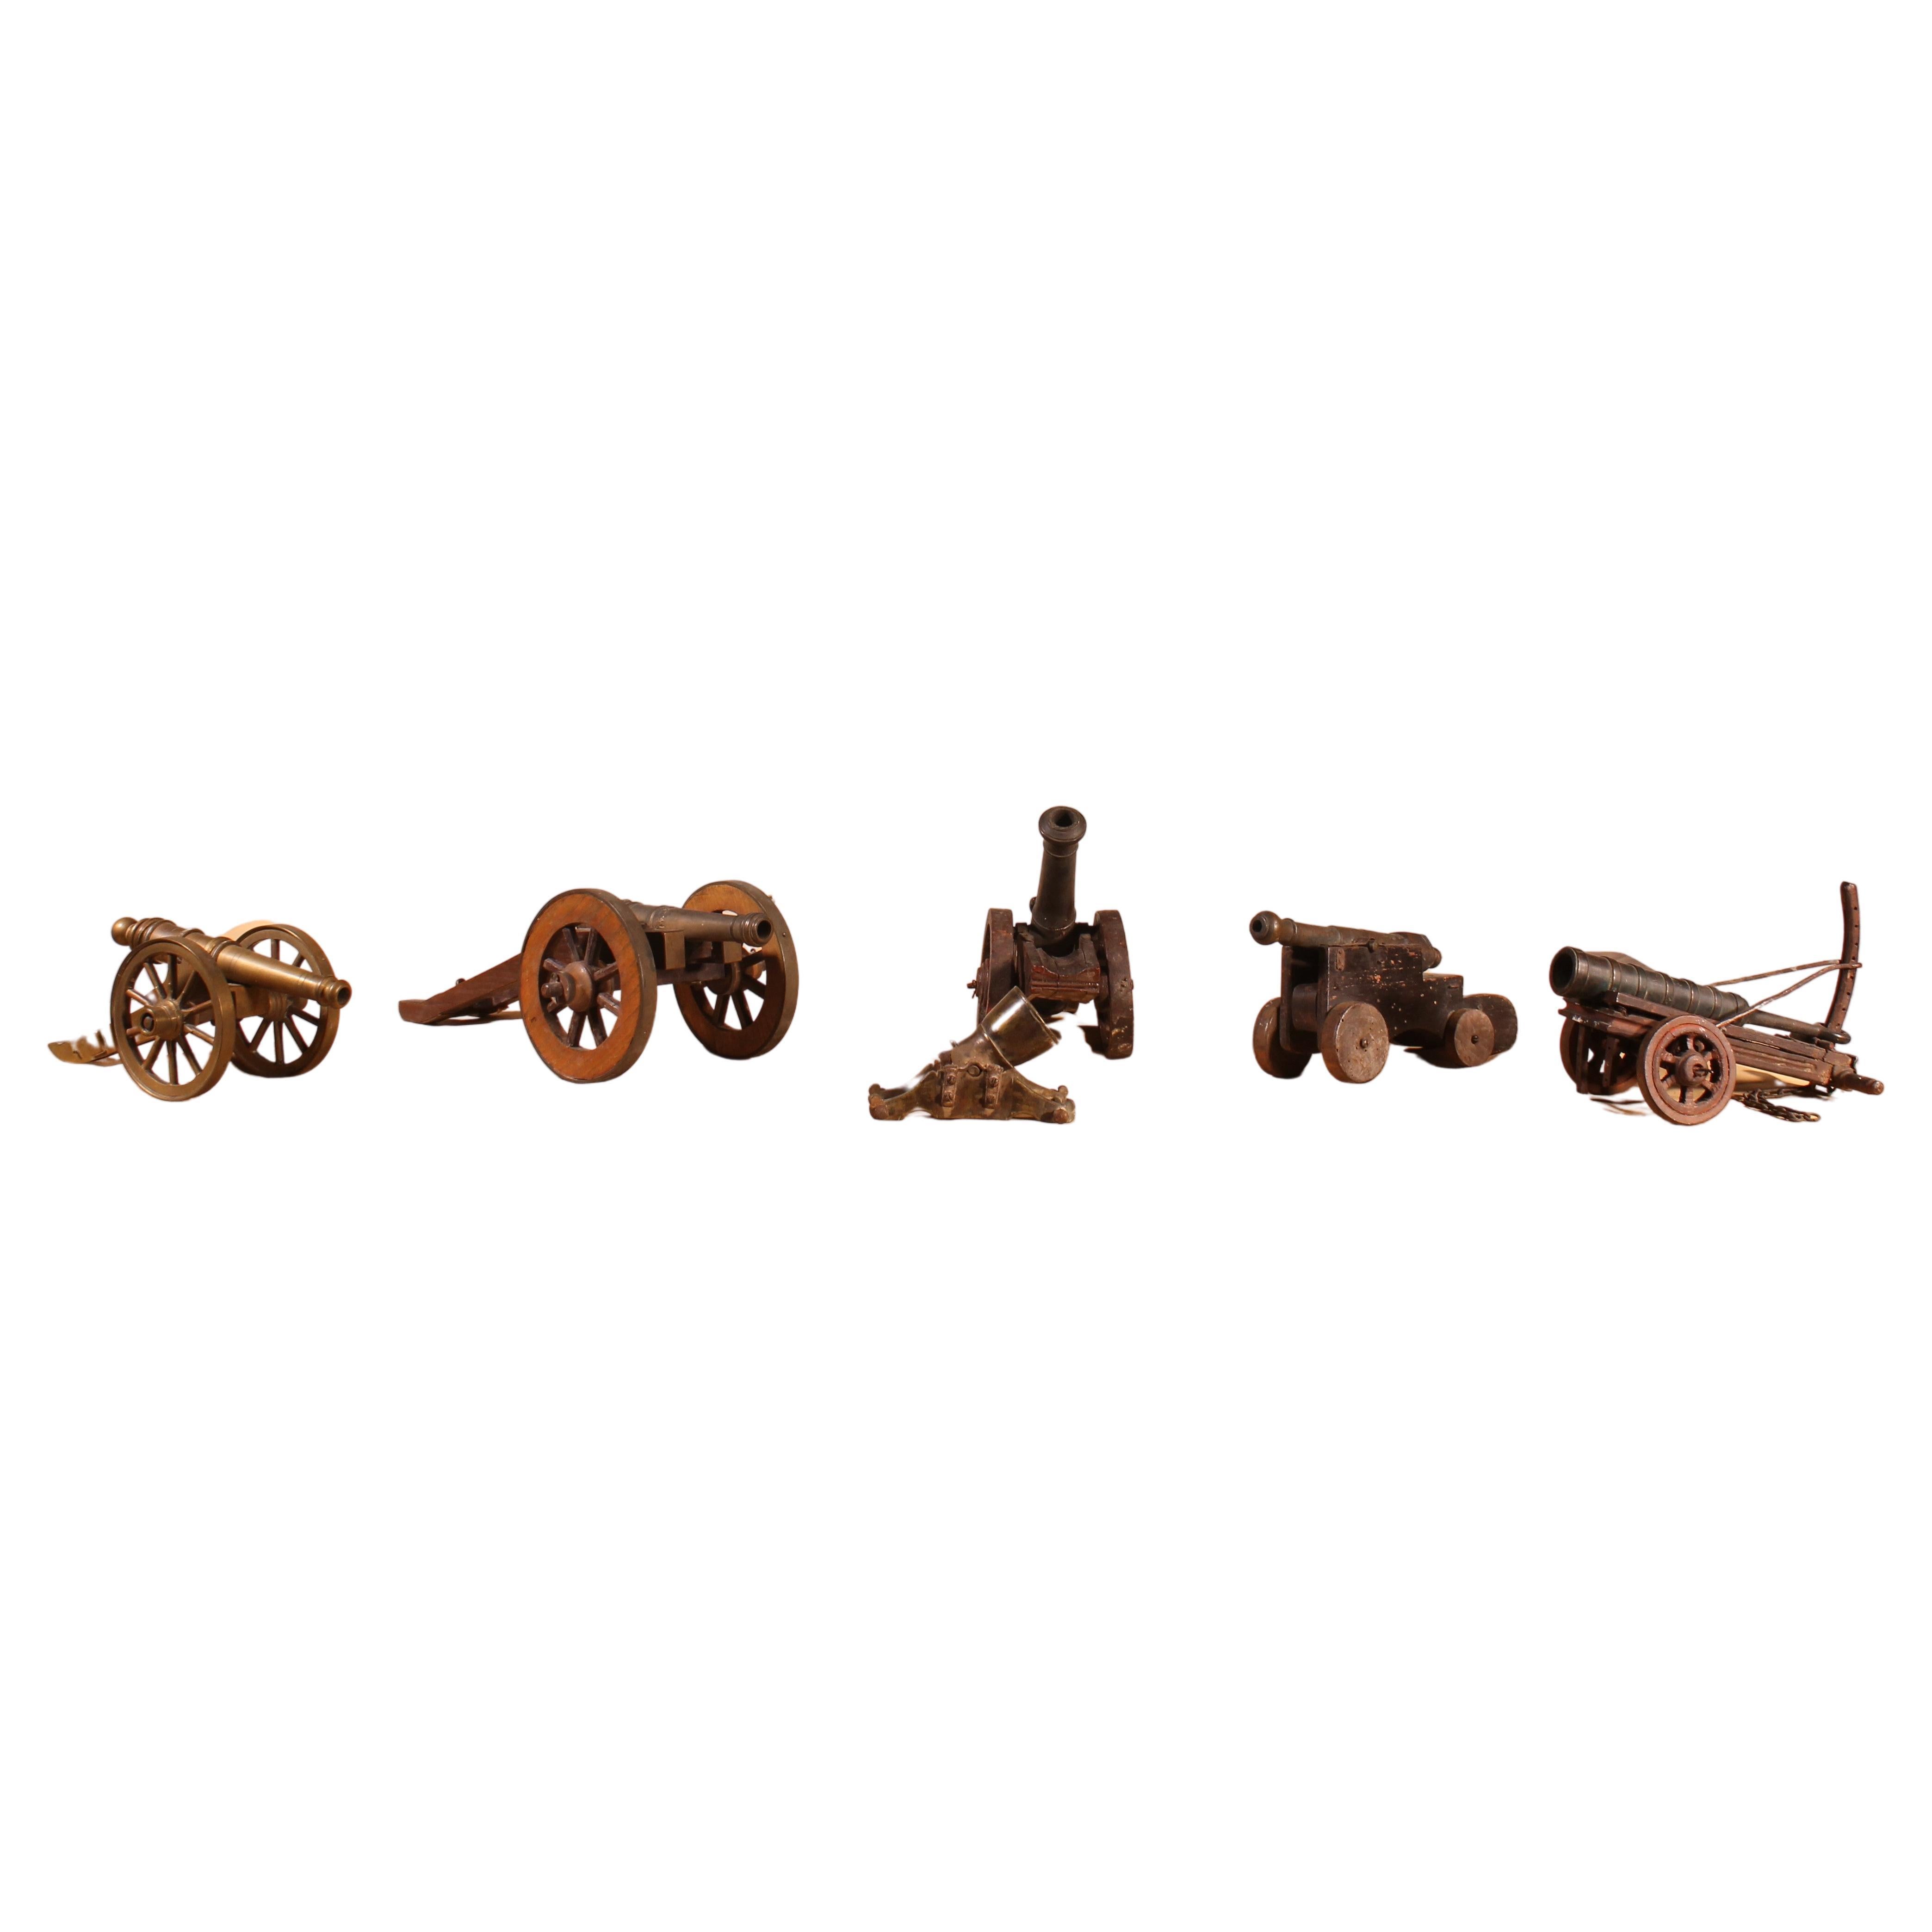 6 Miniatur Kanonen aus dem, 19. Jahrhundert